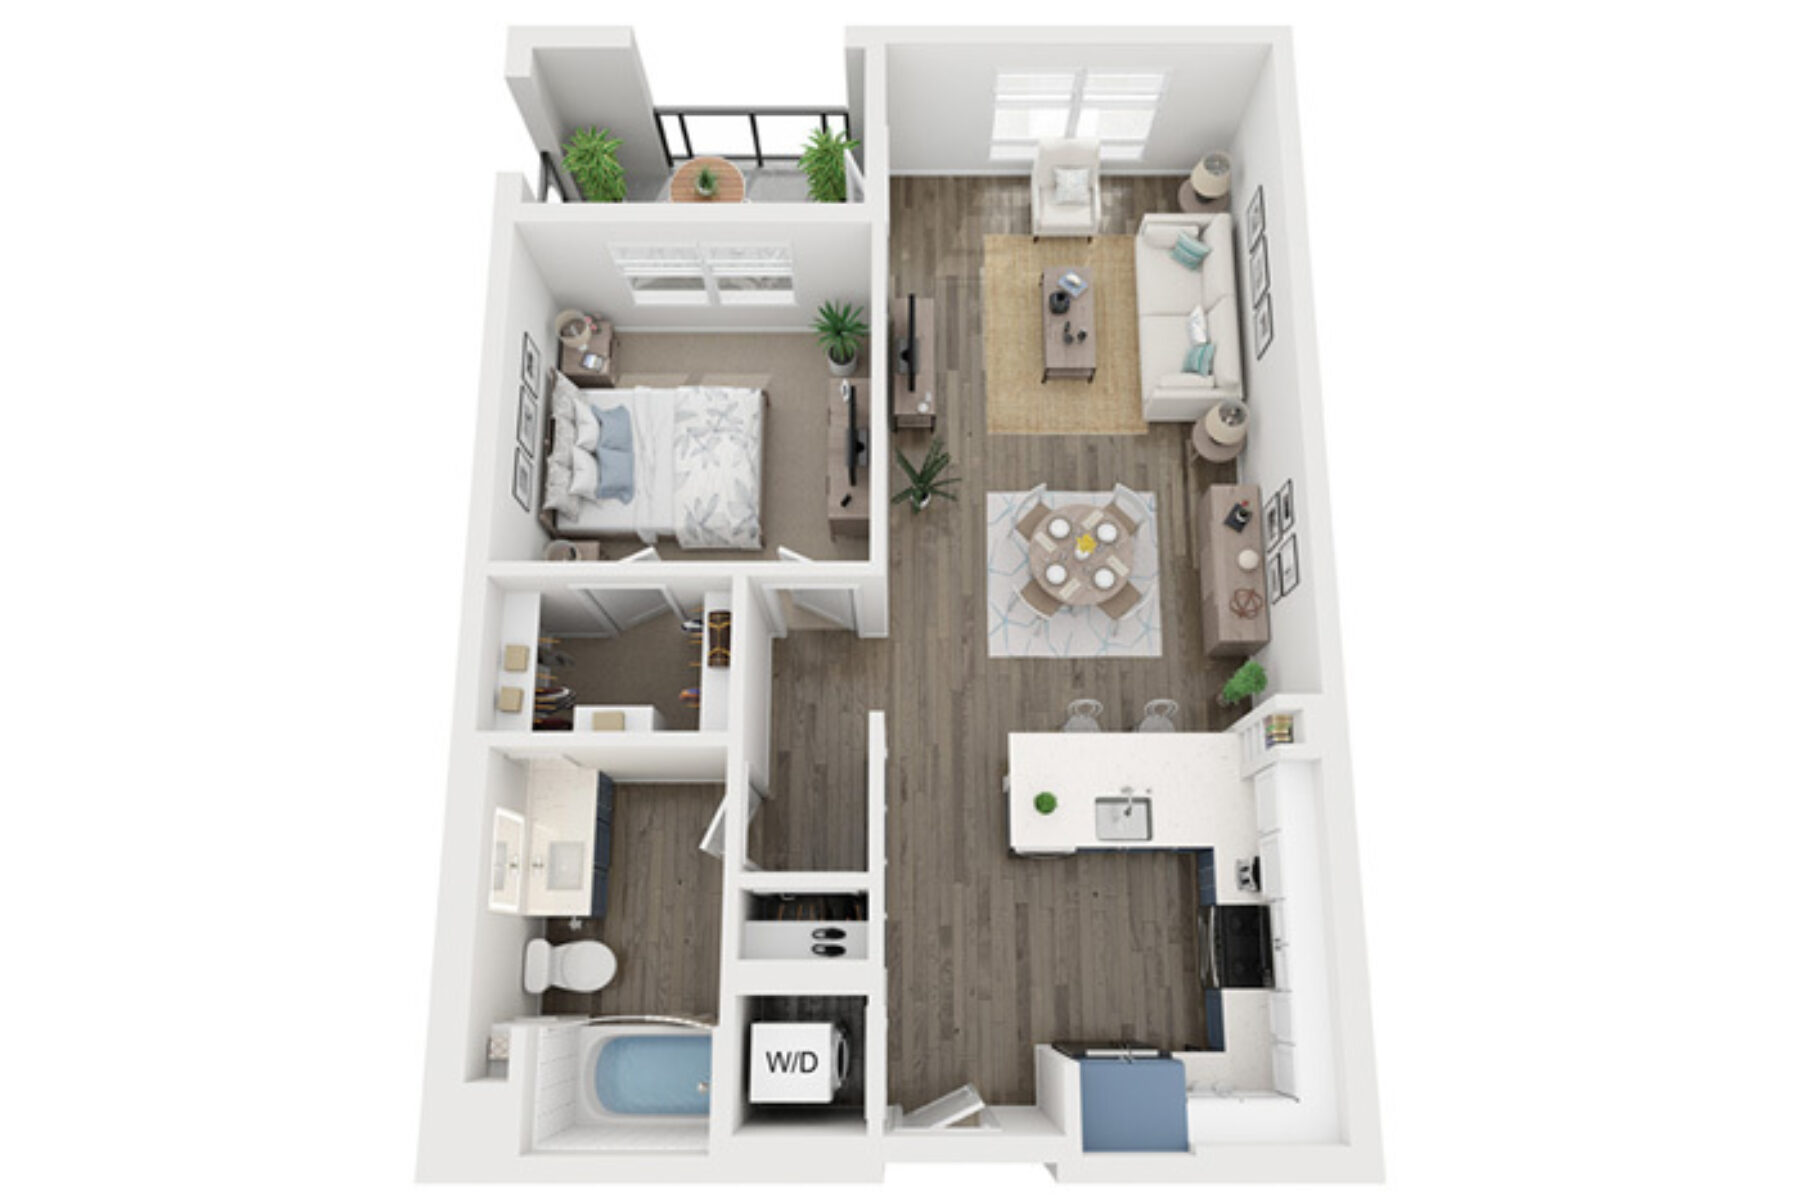 Plan Image: B2 - One Bedroom